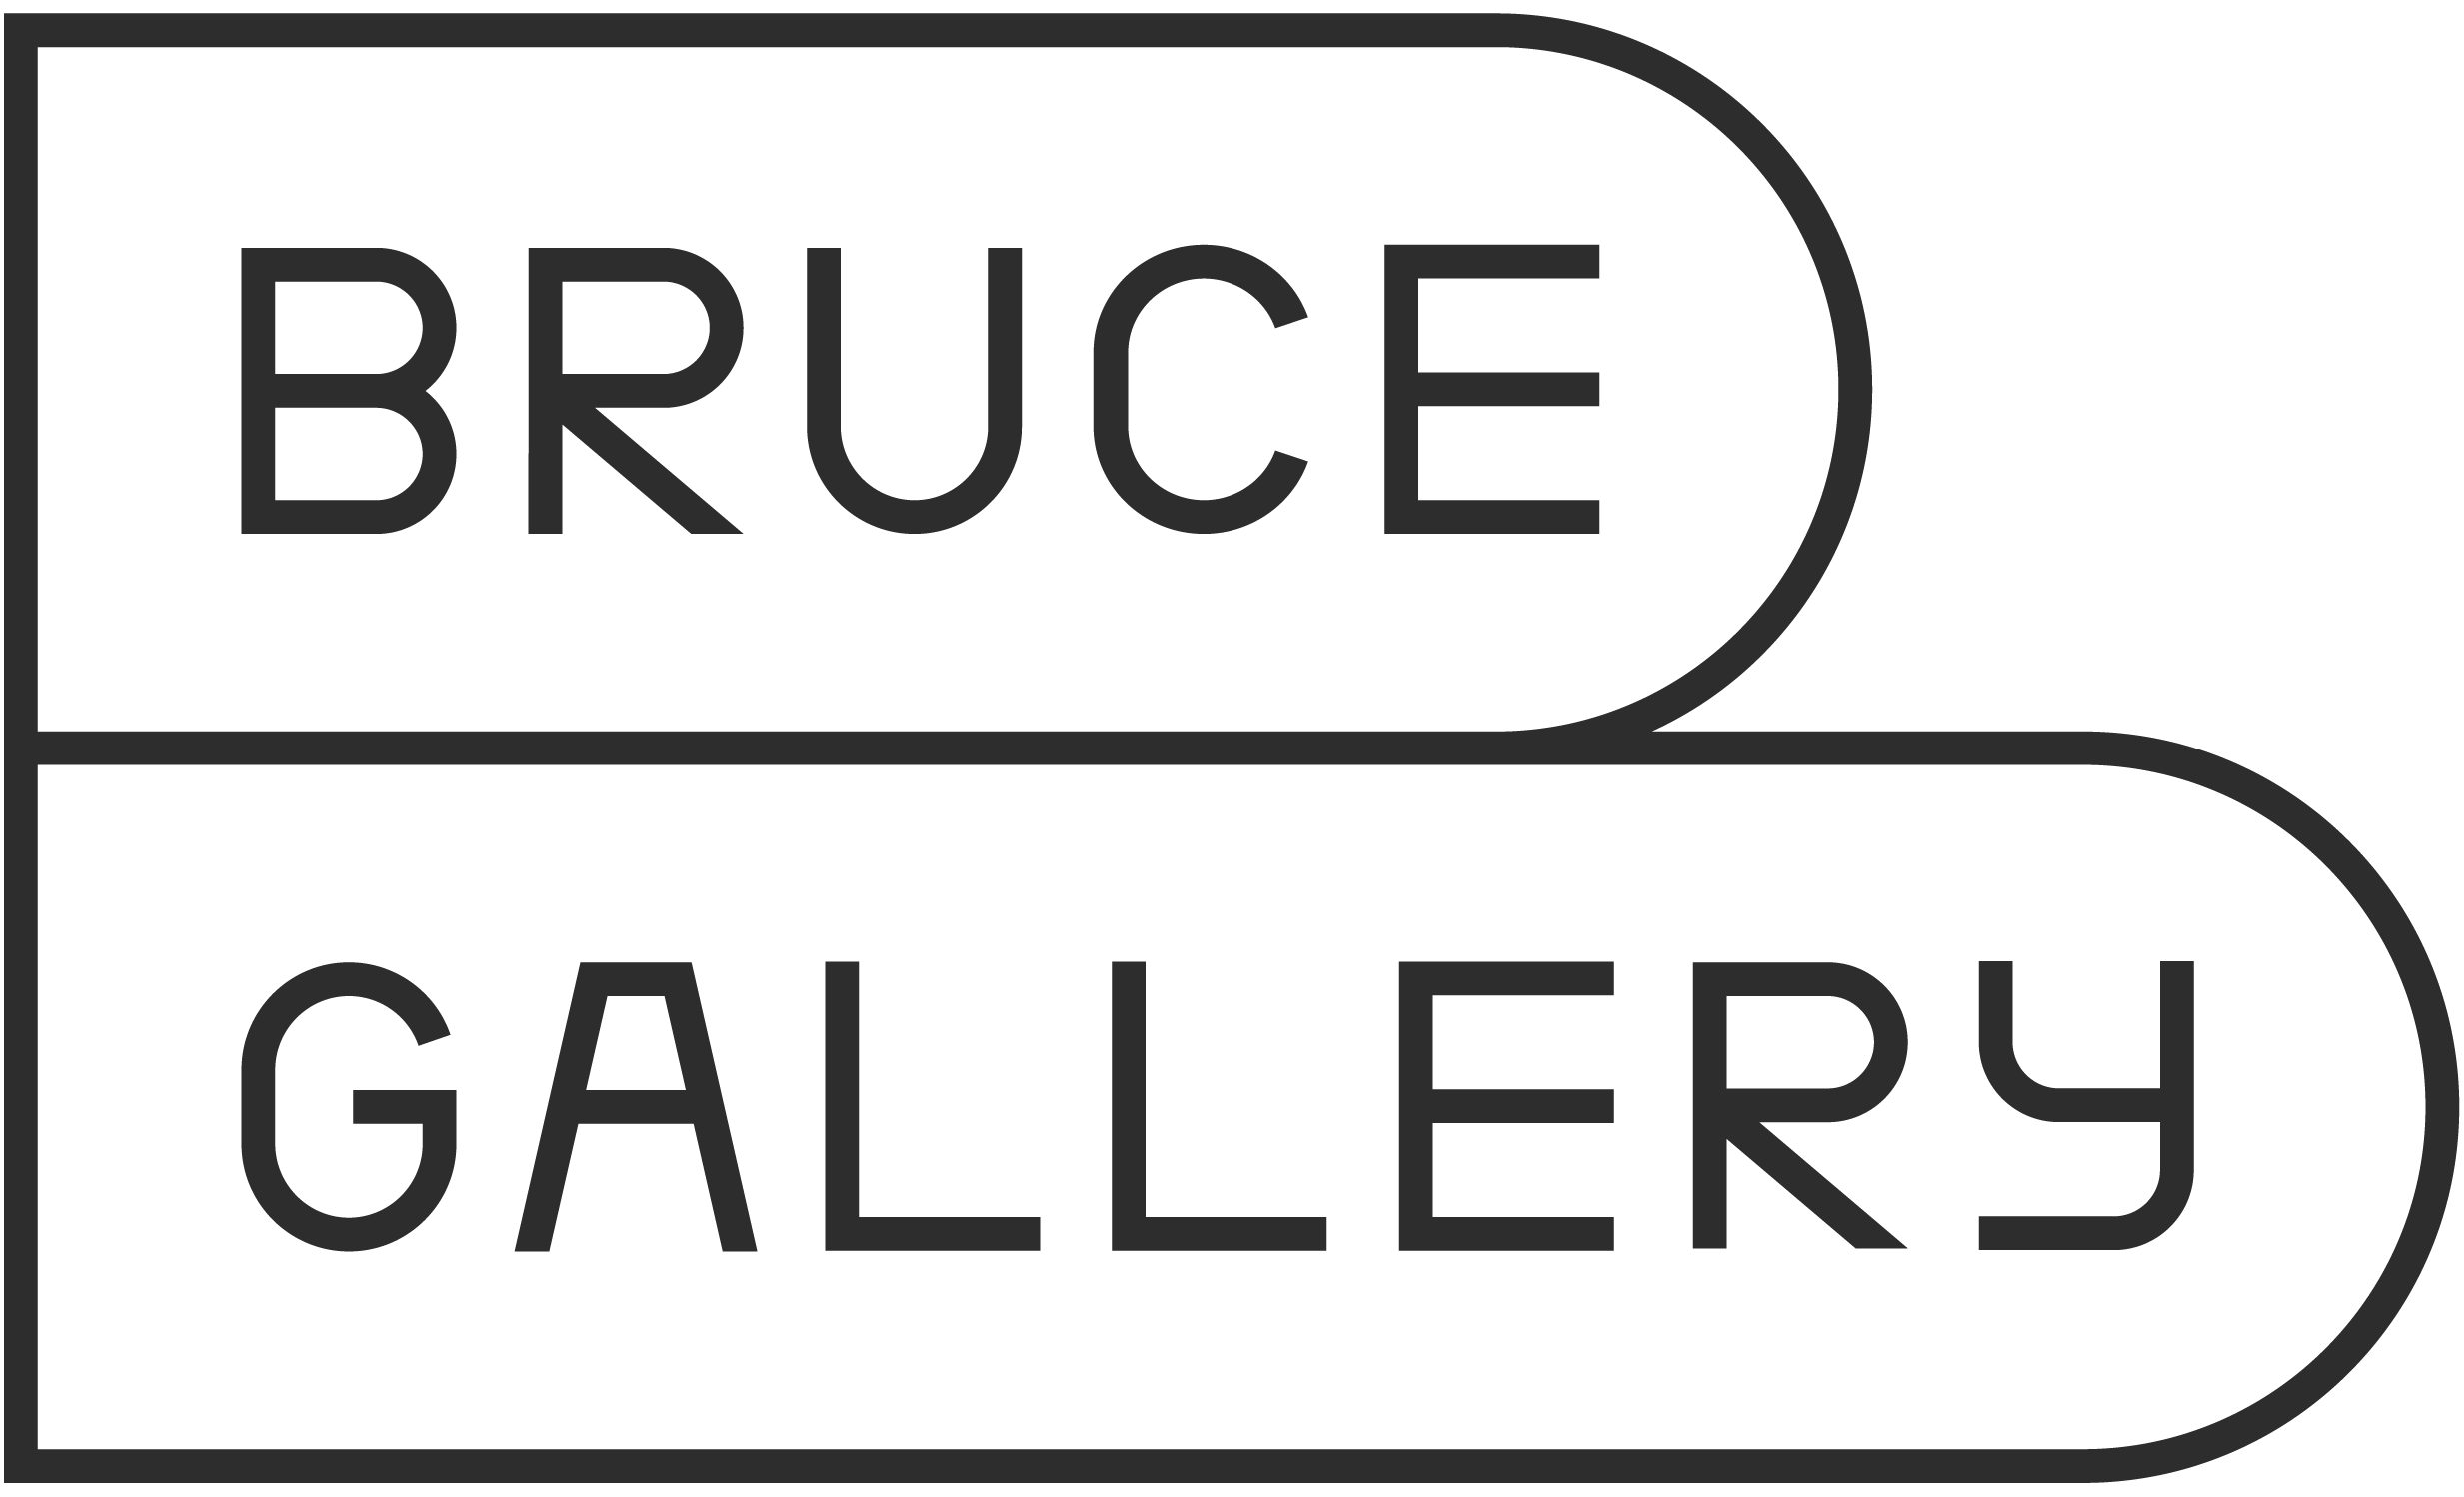 Bruce Gallery